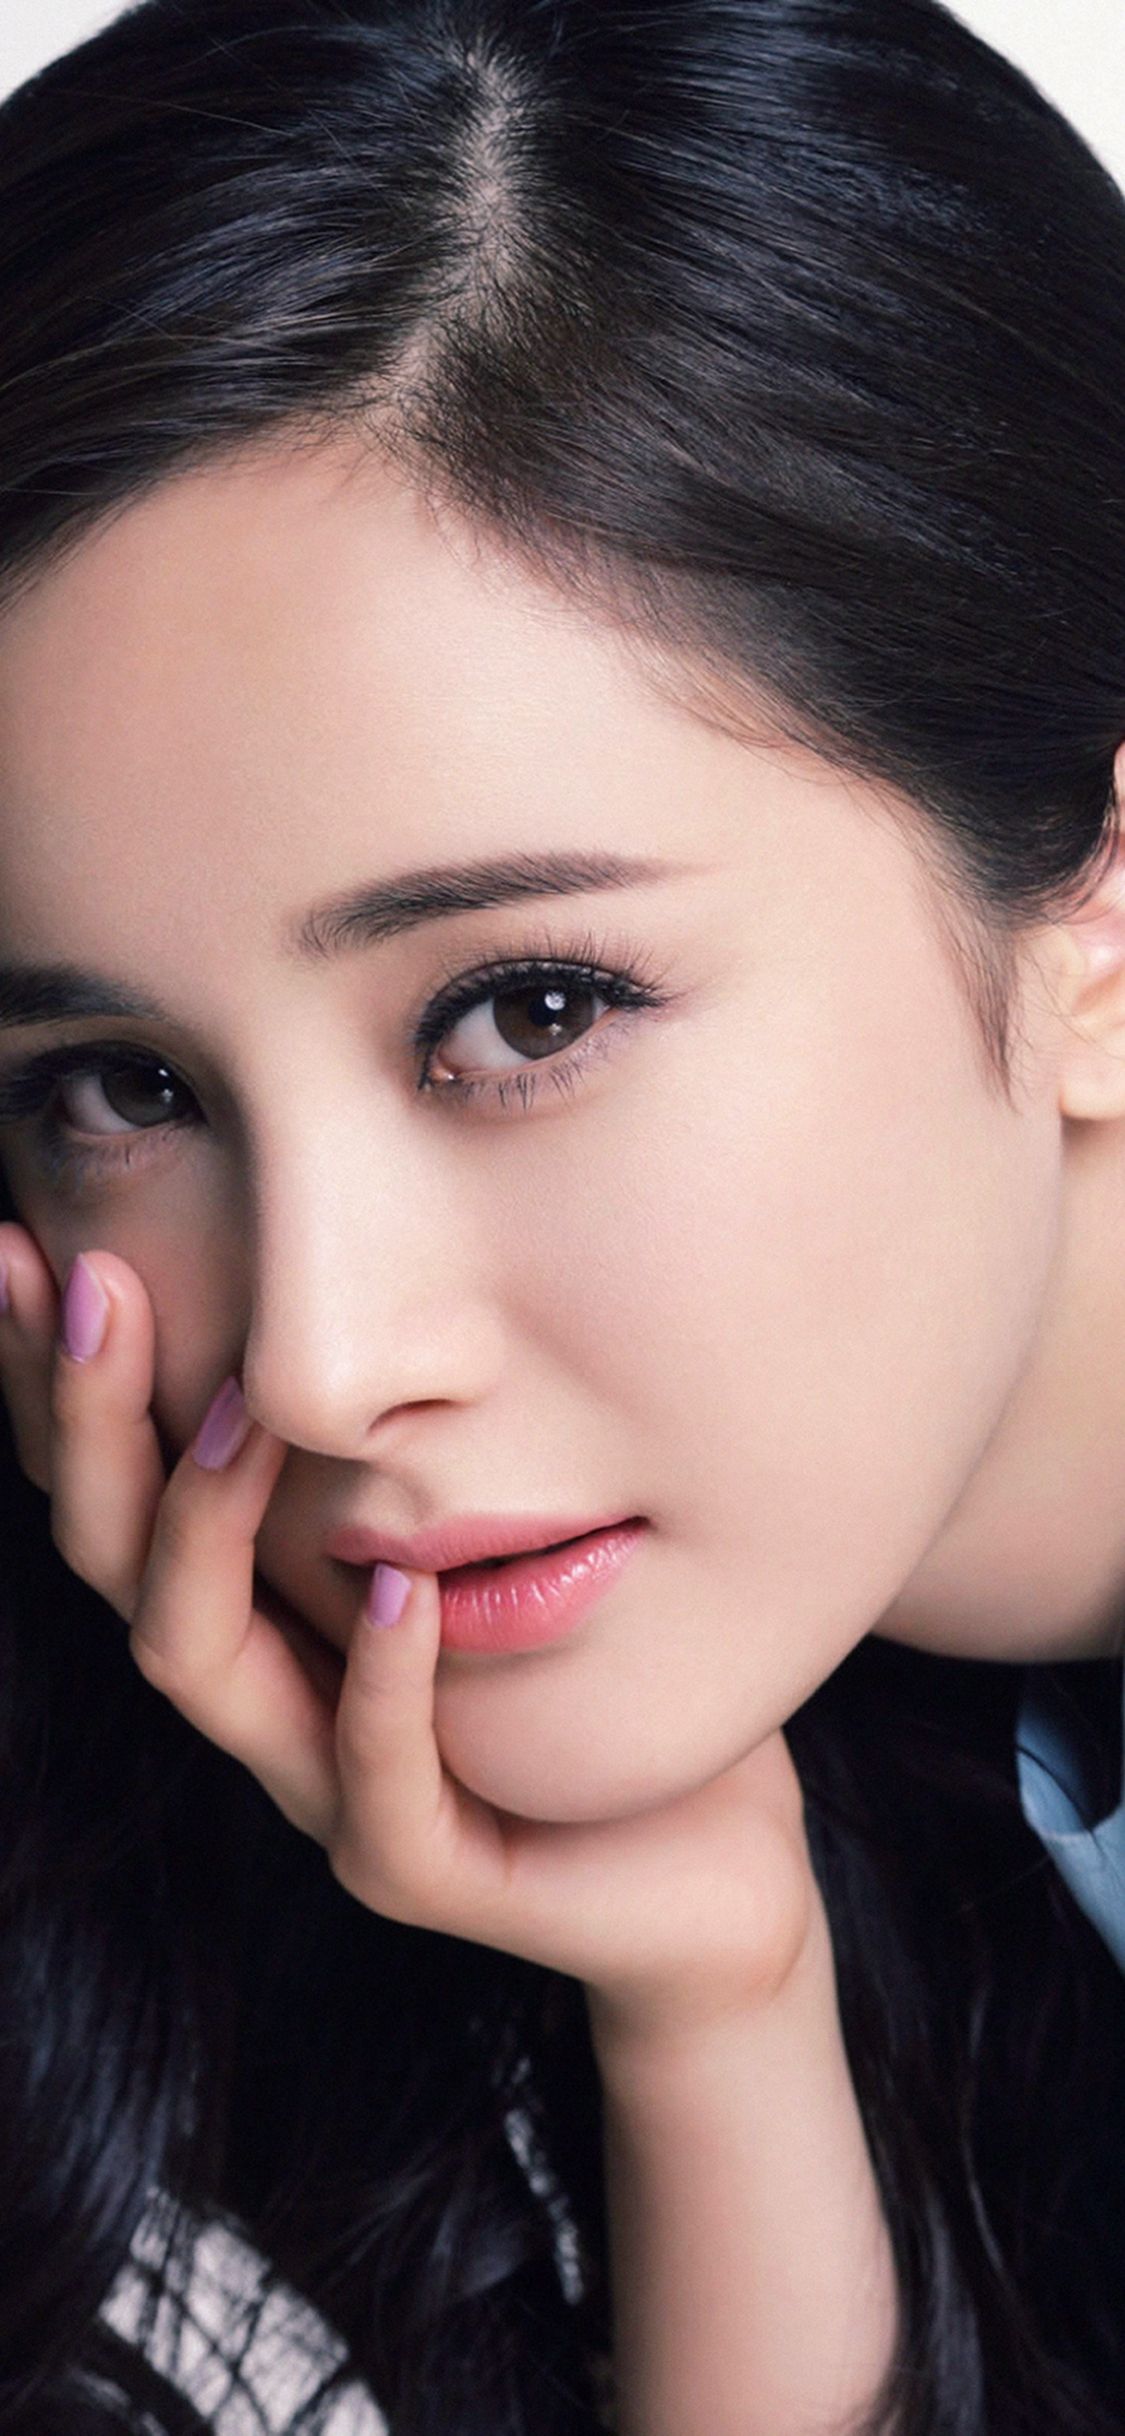 Yang Mi Chinese Star Beauty Film iPhone X Wallpaper. Star beauty